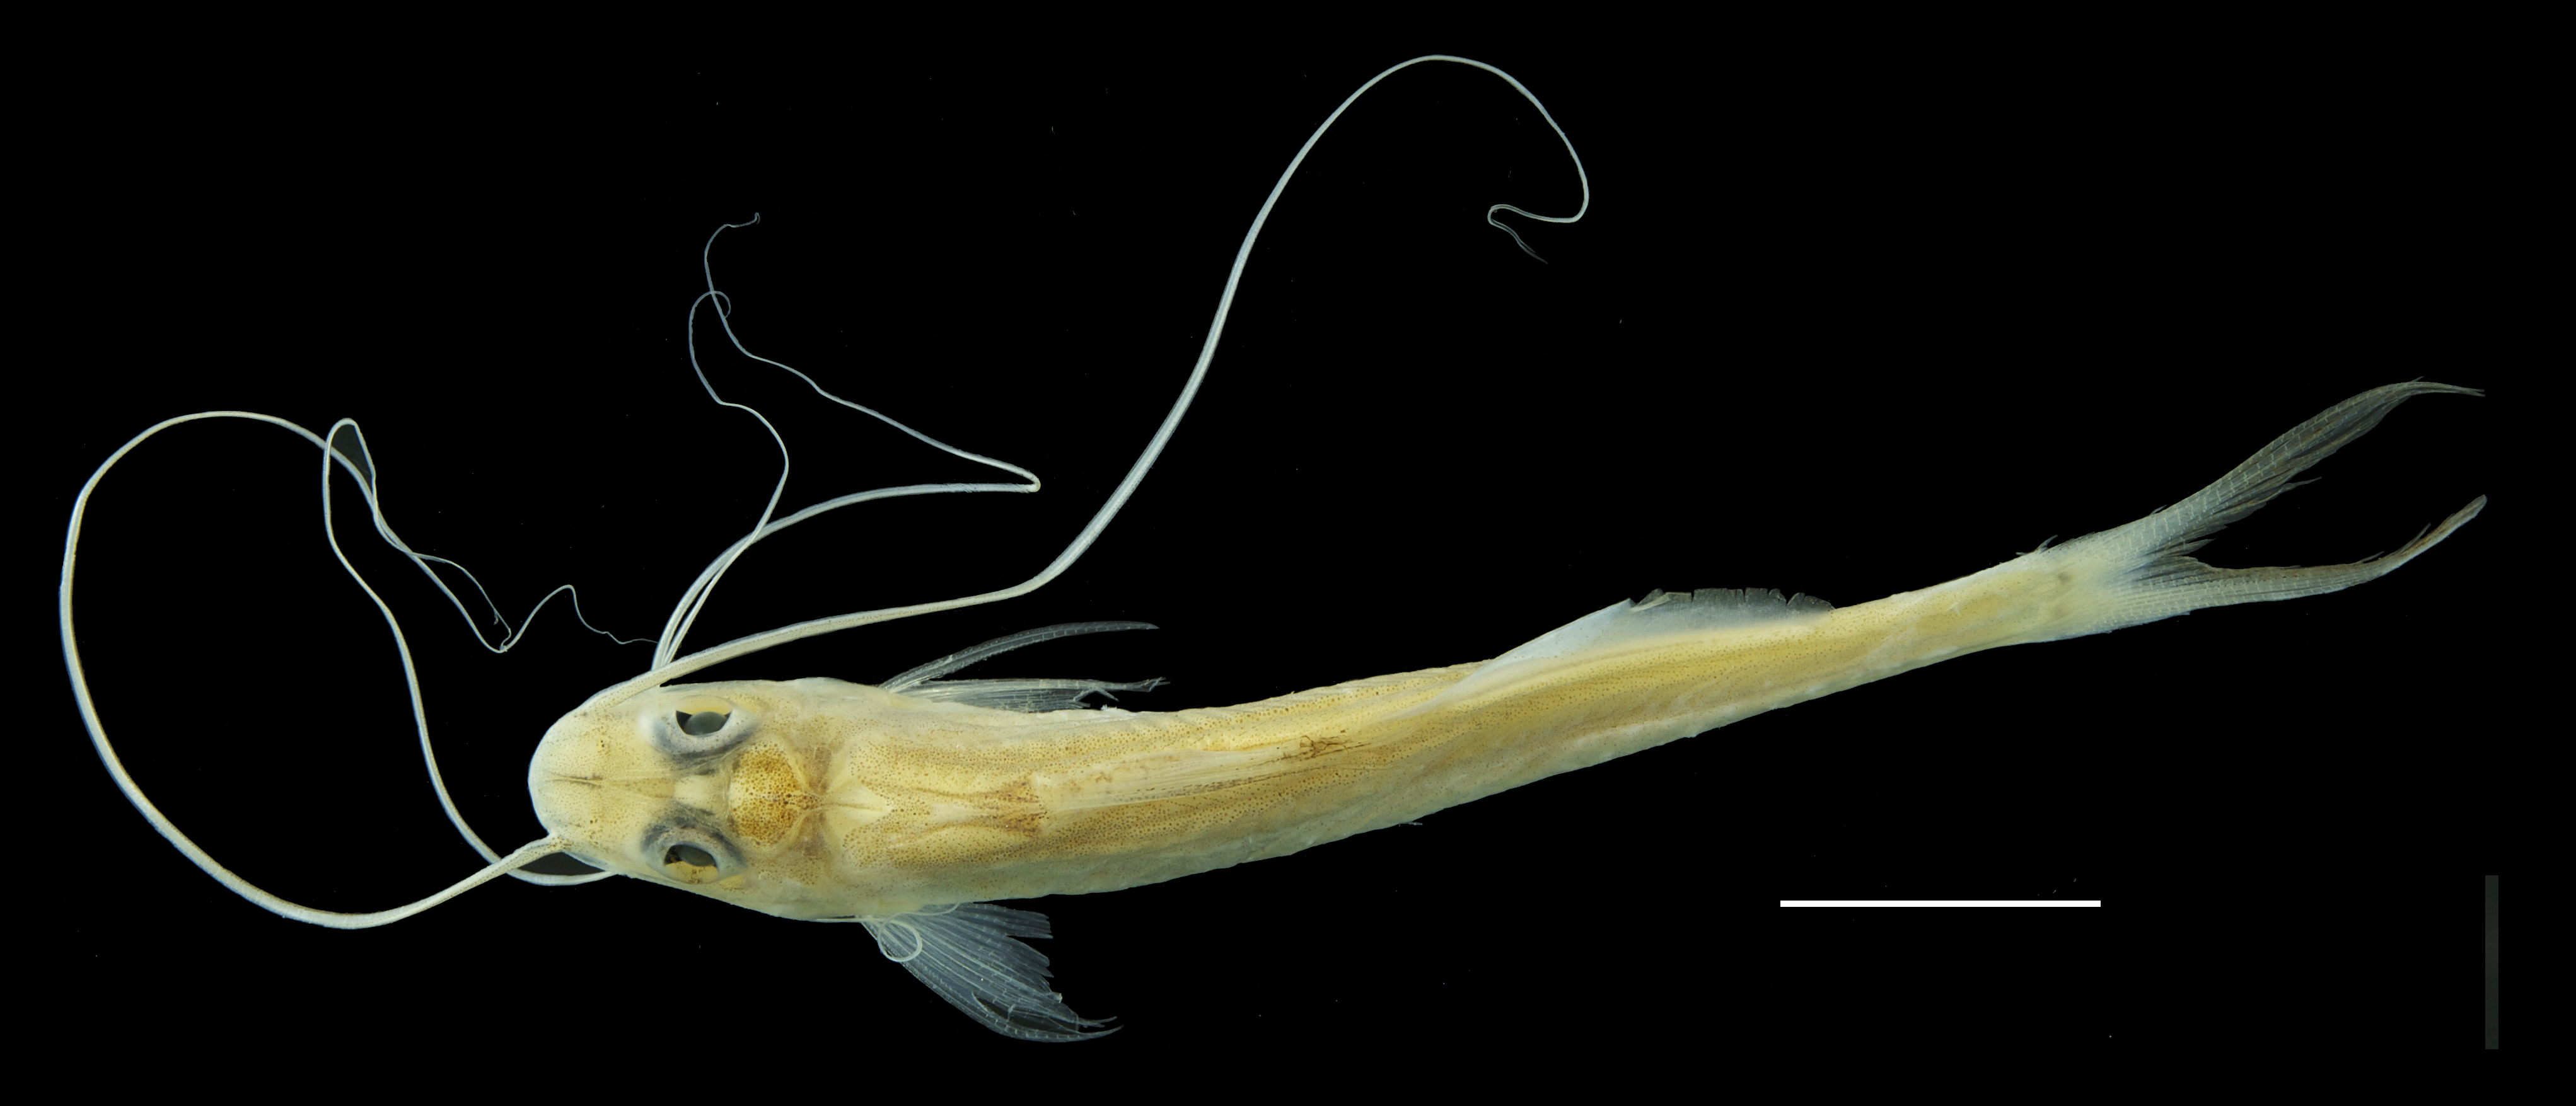 Paratype of <em>Megalonema amaxanthum</em>, IAvH-P-11020_Dorsal, 54.0 mm SL (scale bar = 1 cm). Photograph by M. H. Sabaj Pérez